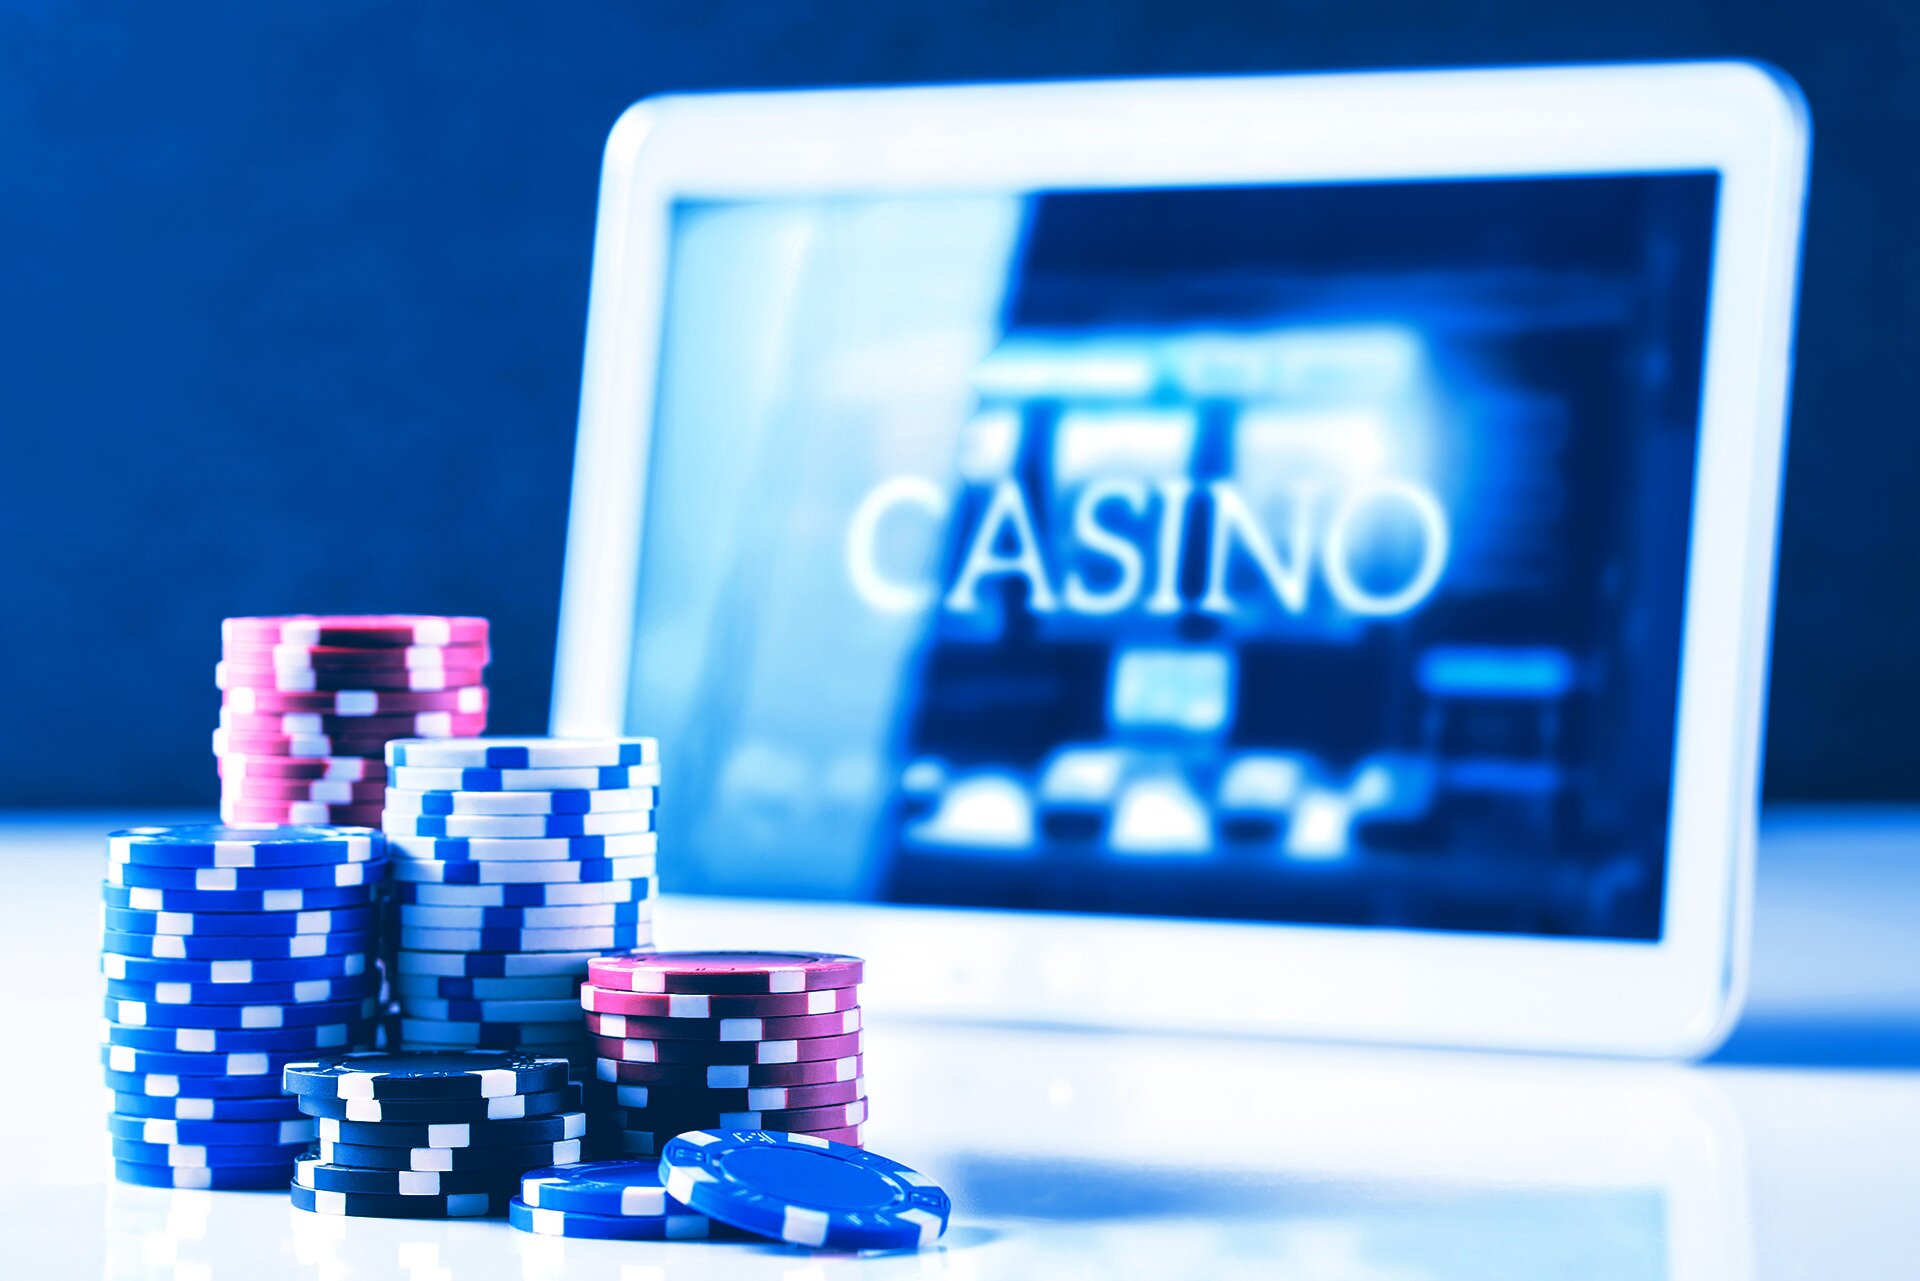 Online Casino Review Australia